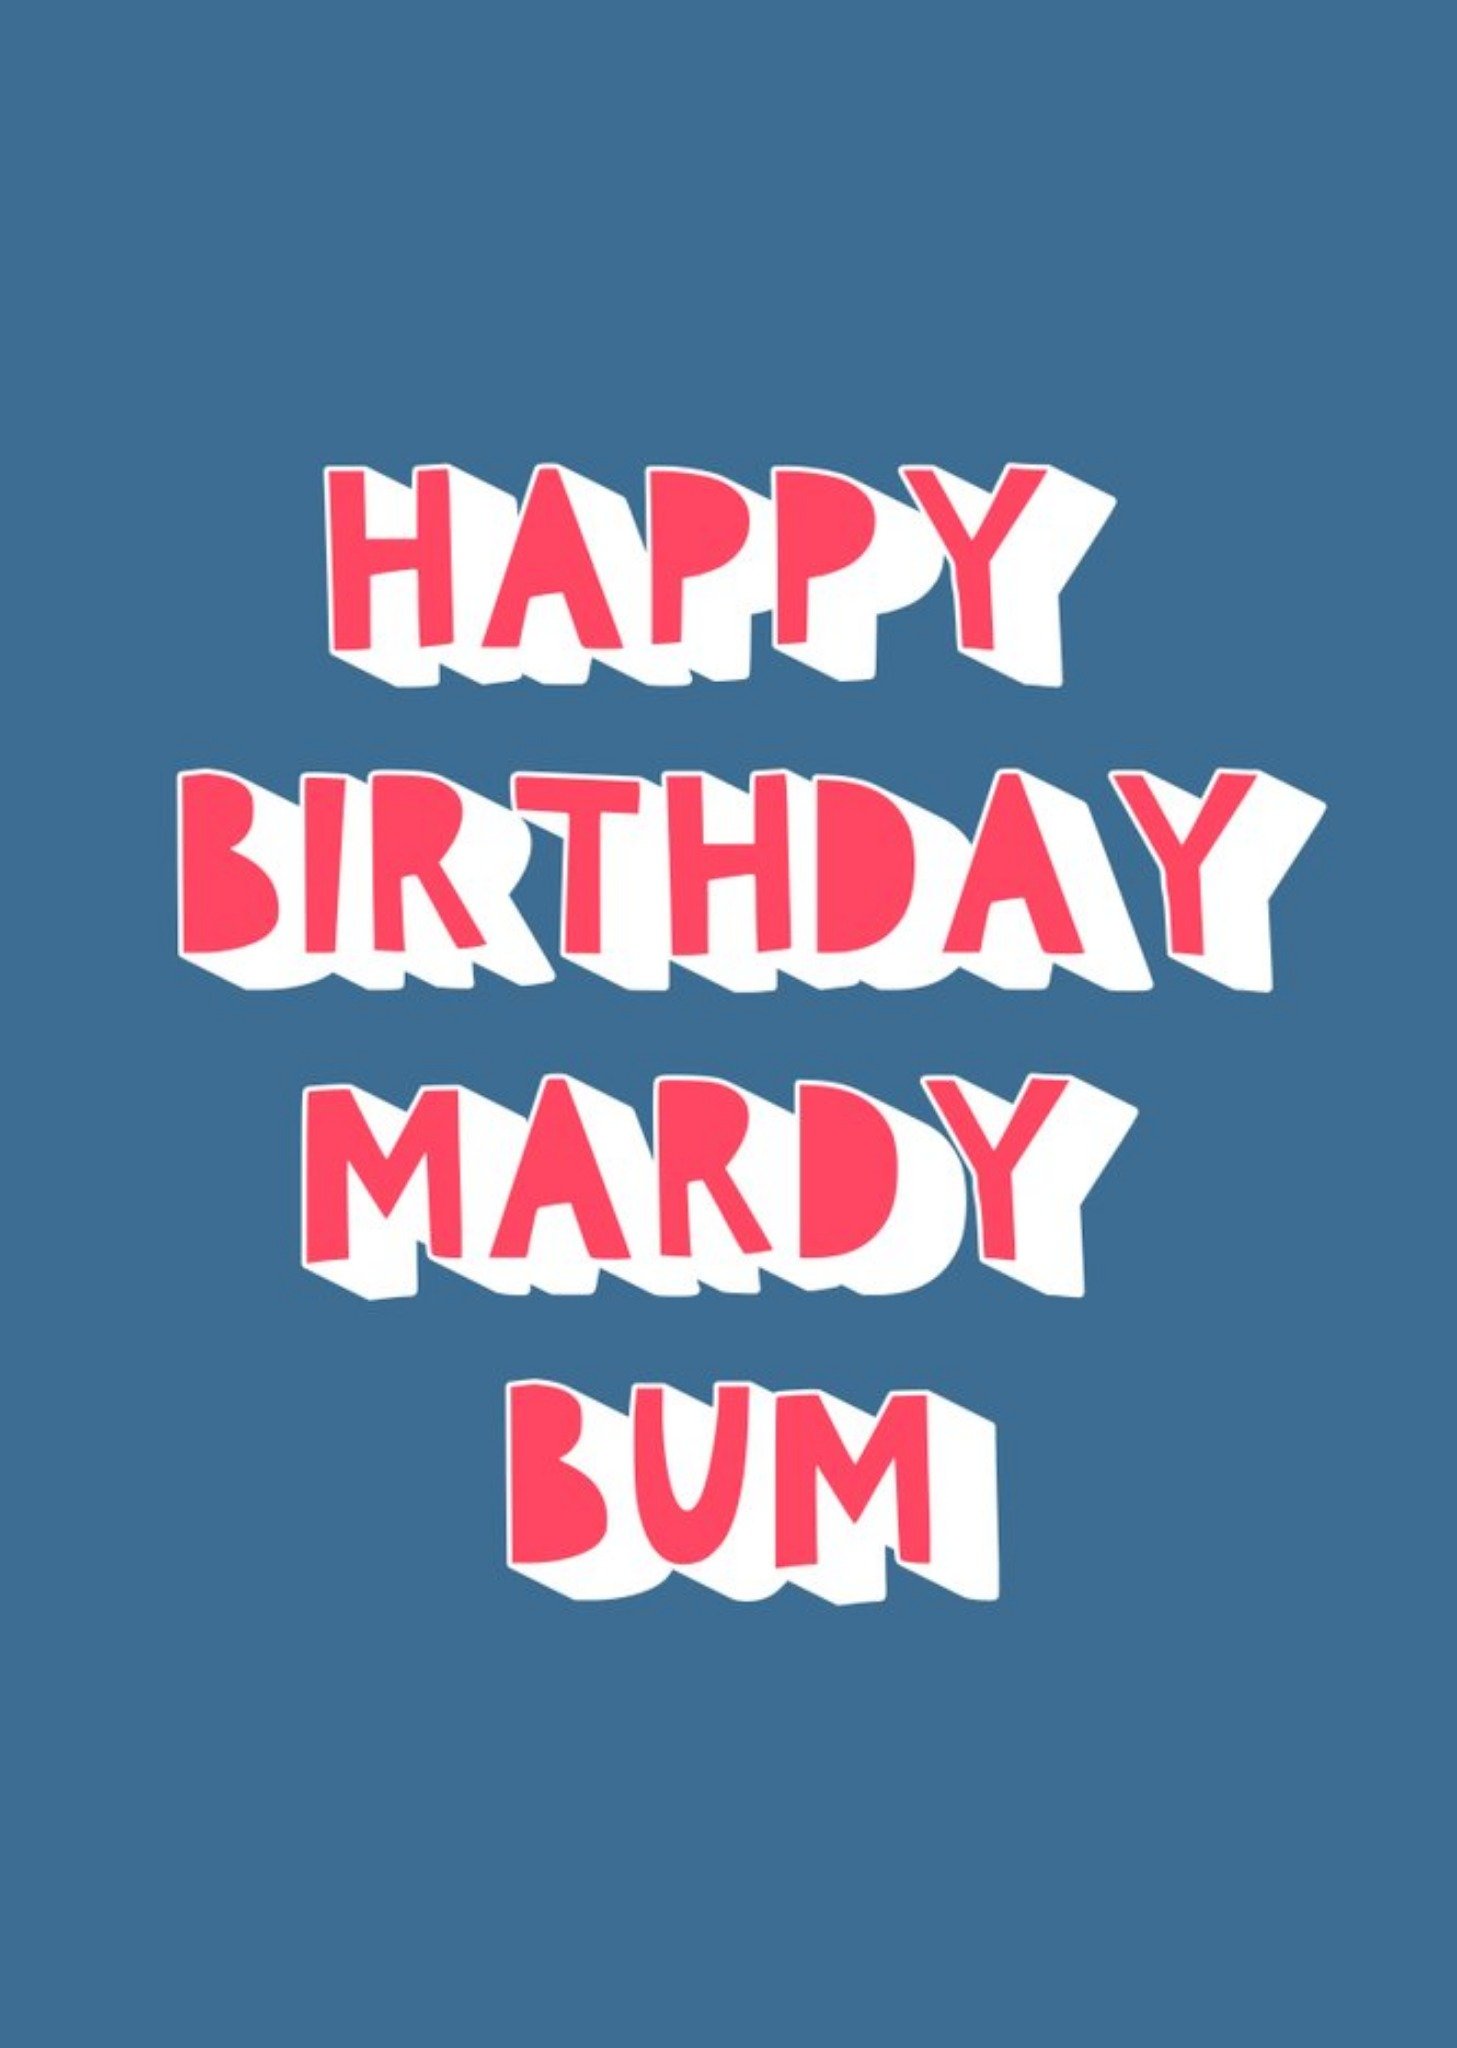 Moonpig Typographic Mardy Bum Birthday Card Ecard